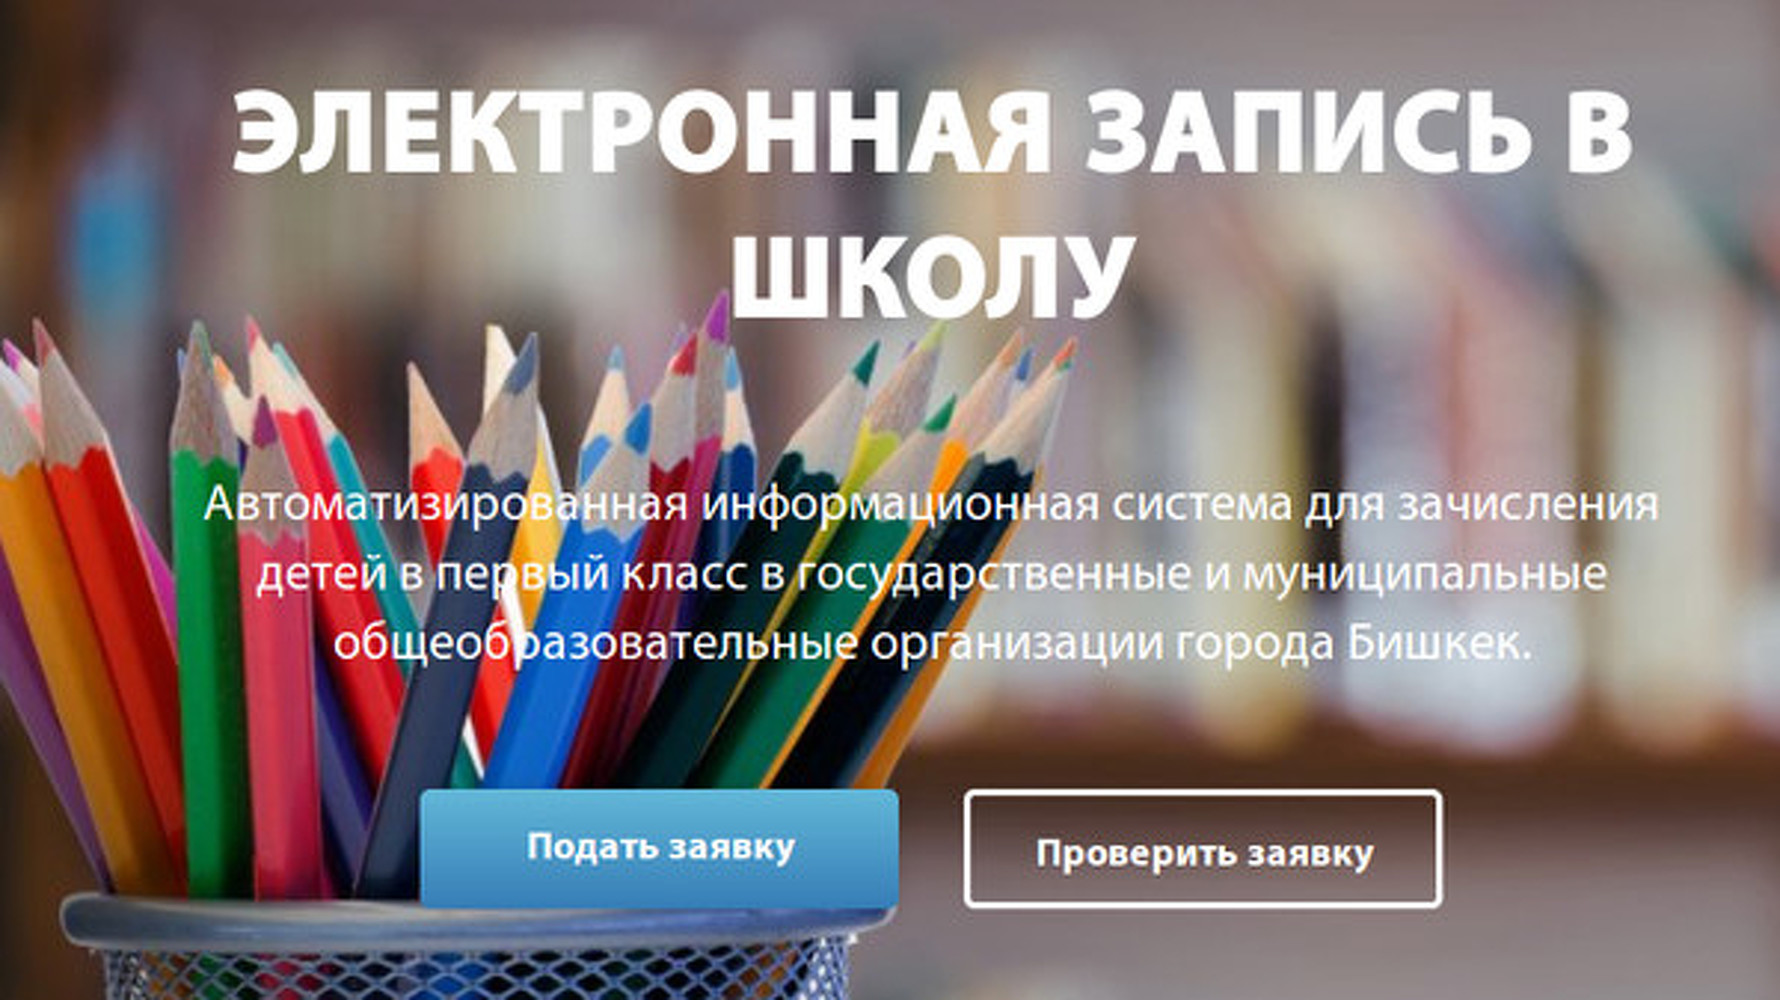 Https edu gov kg. Электронная запись в школу. Запись в школу в 1 класс. Электронная запись в школу Кыргызстан. Электронный запись в школу Бишкек.